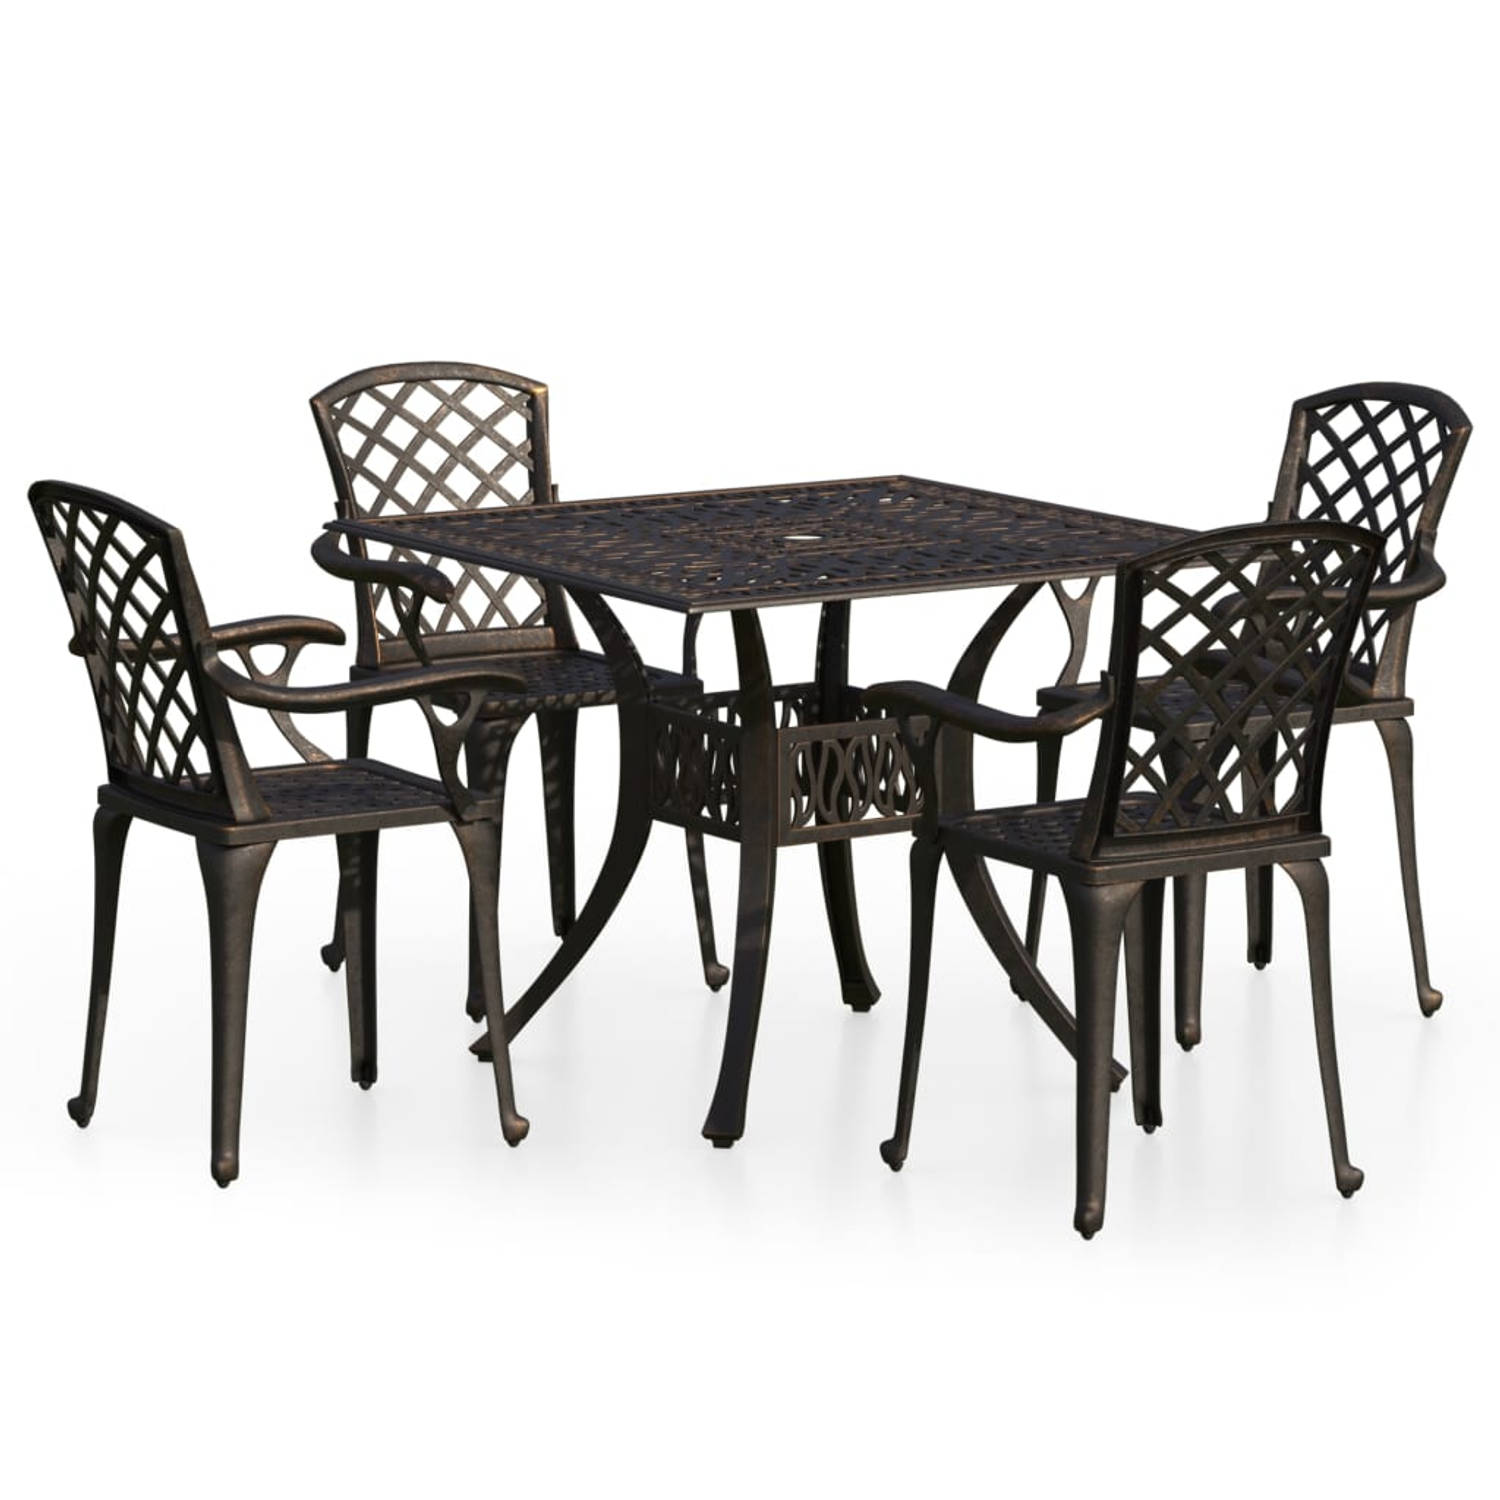 The Living Store Bistroset - Gietaluminium - Tuinstoelen en tafel - Brons - 61x60x93 cm stoel - 90x90x73 cm tafel